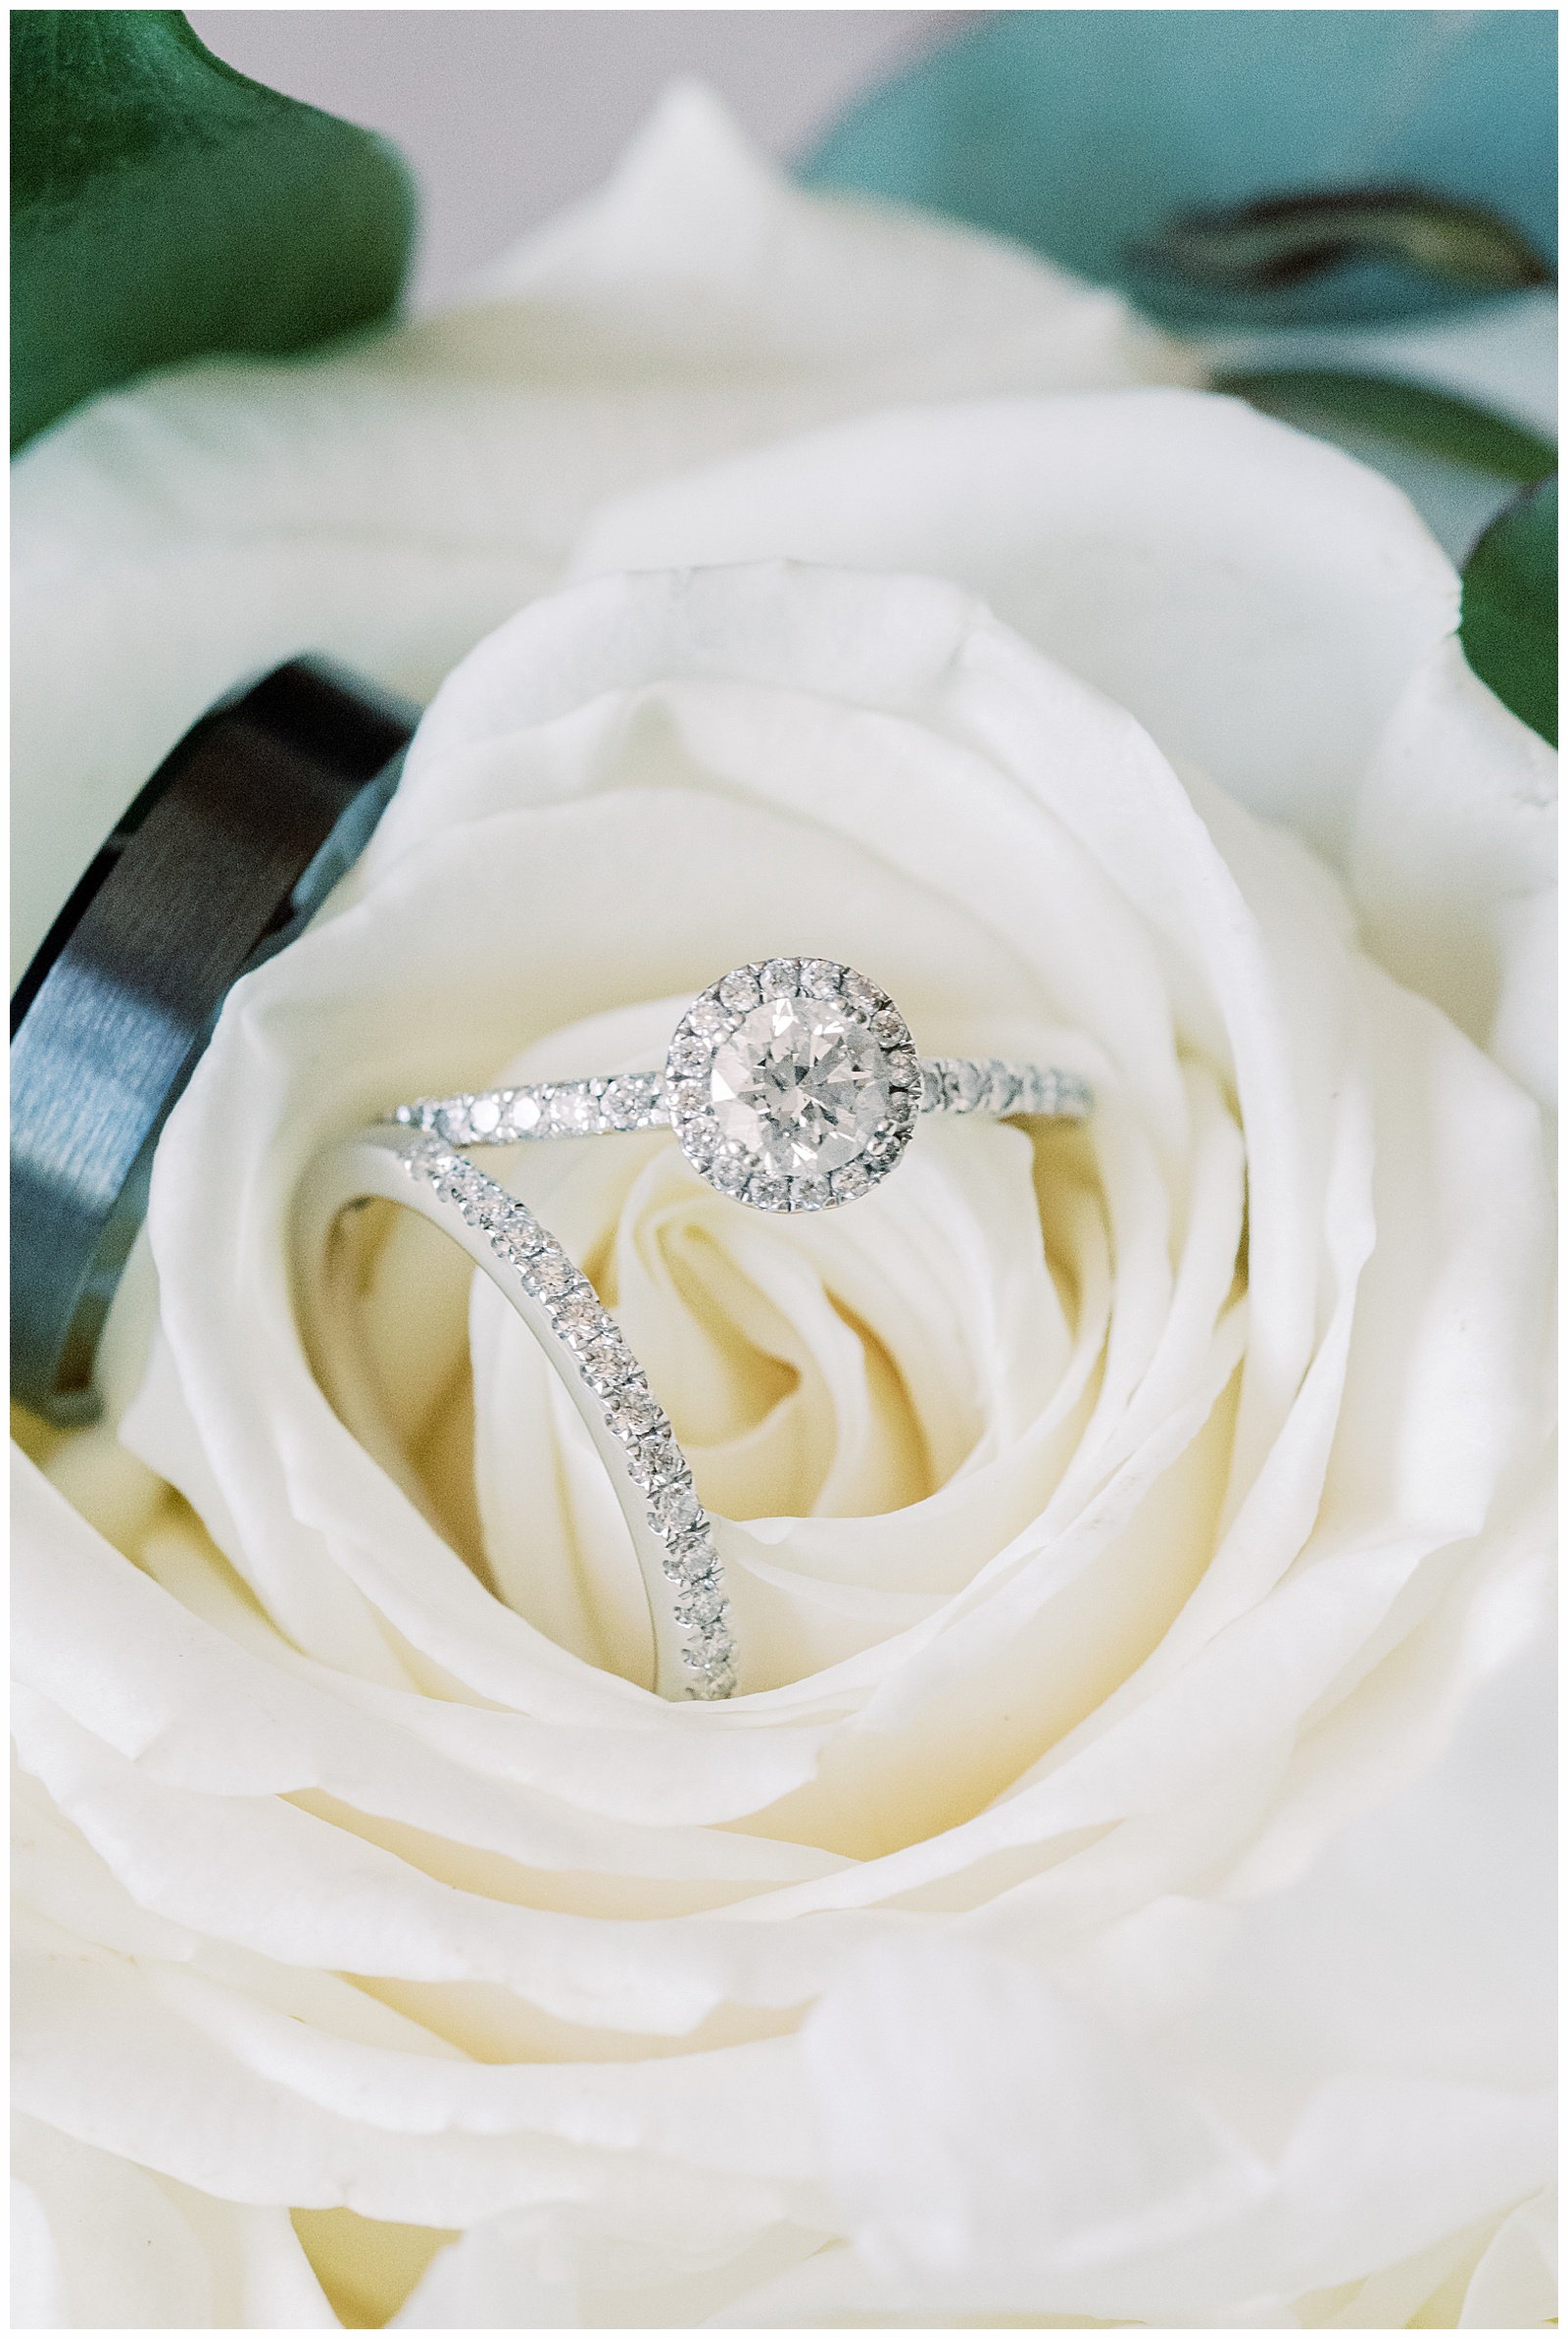 Waterdown Farm Wedding Wedding Bands and Engagement Ring